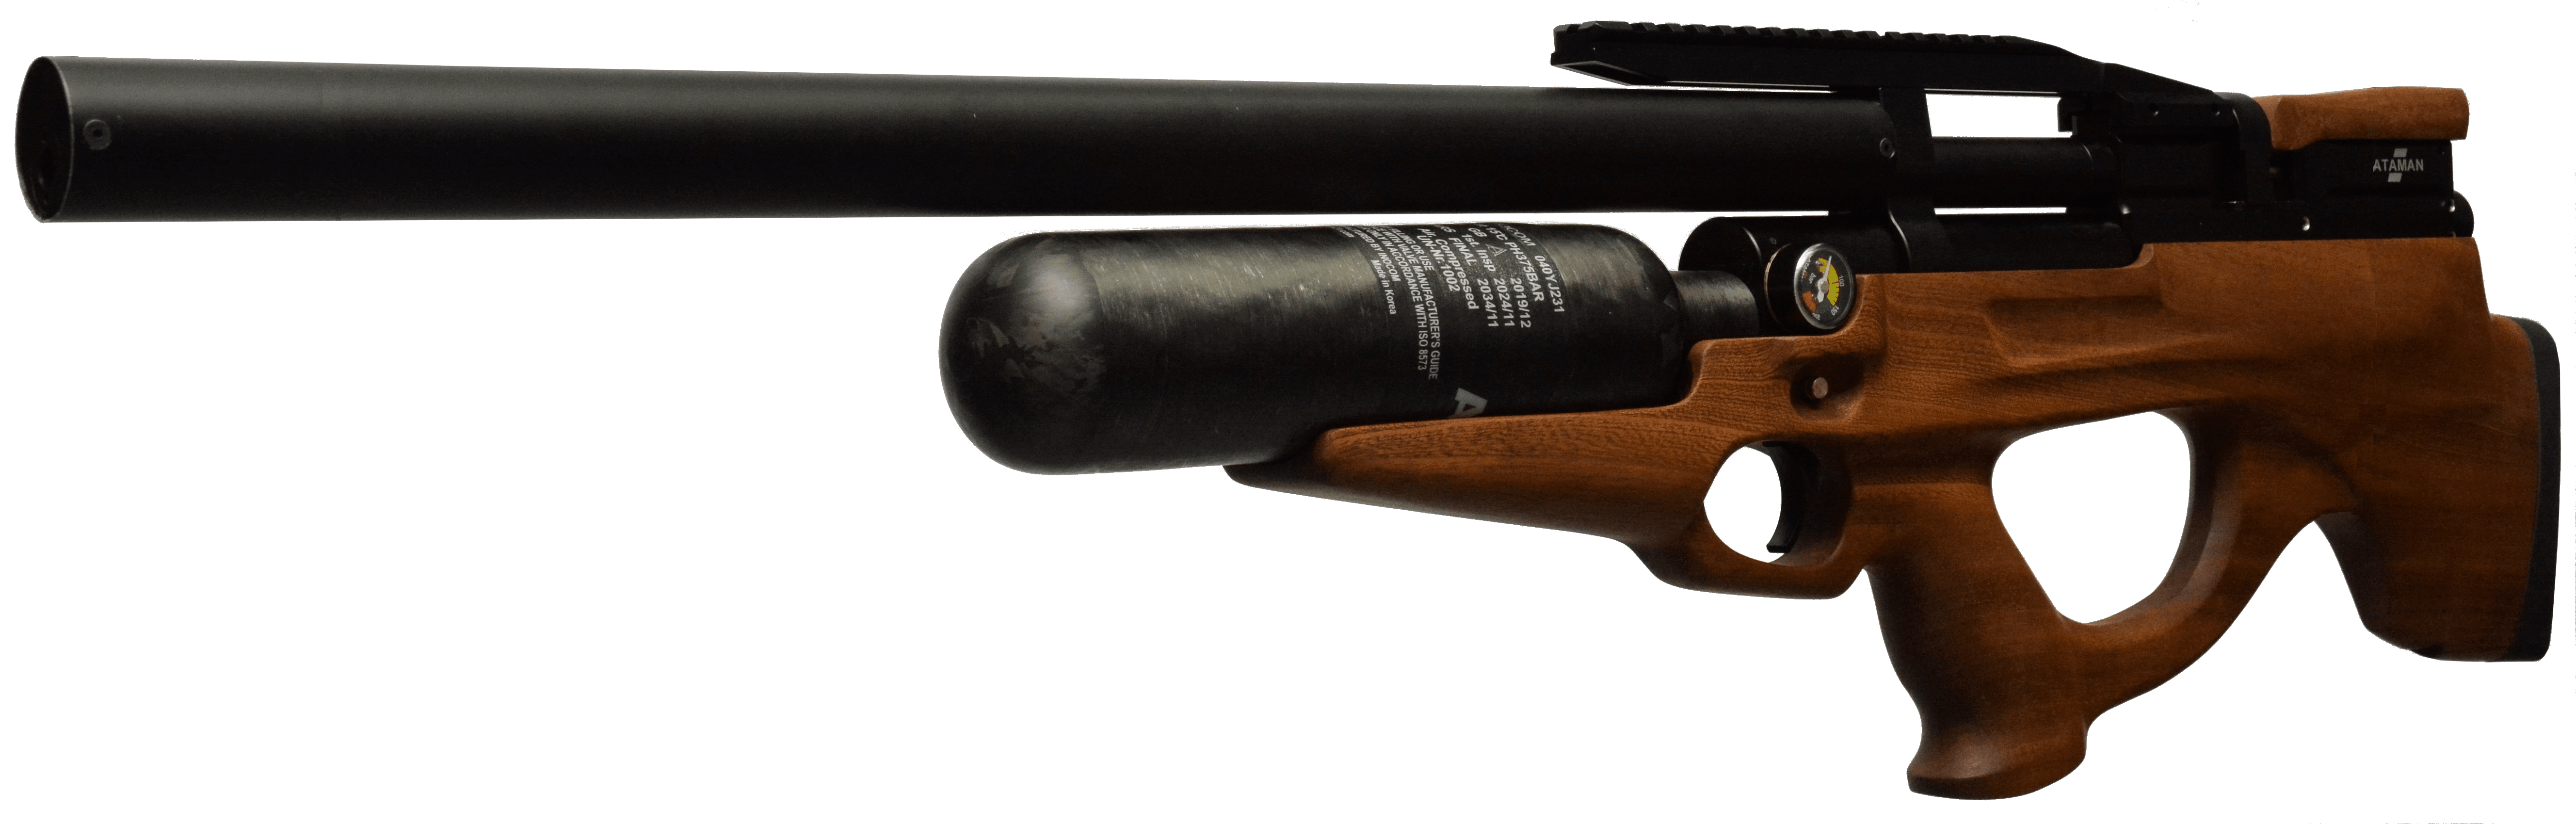 Пневматическая PCP винтовка ATAMAN Булл-пап MB20 (редуктор), кал.6,35мм (Walnut)